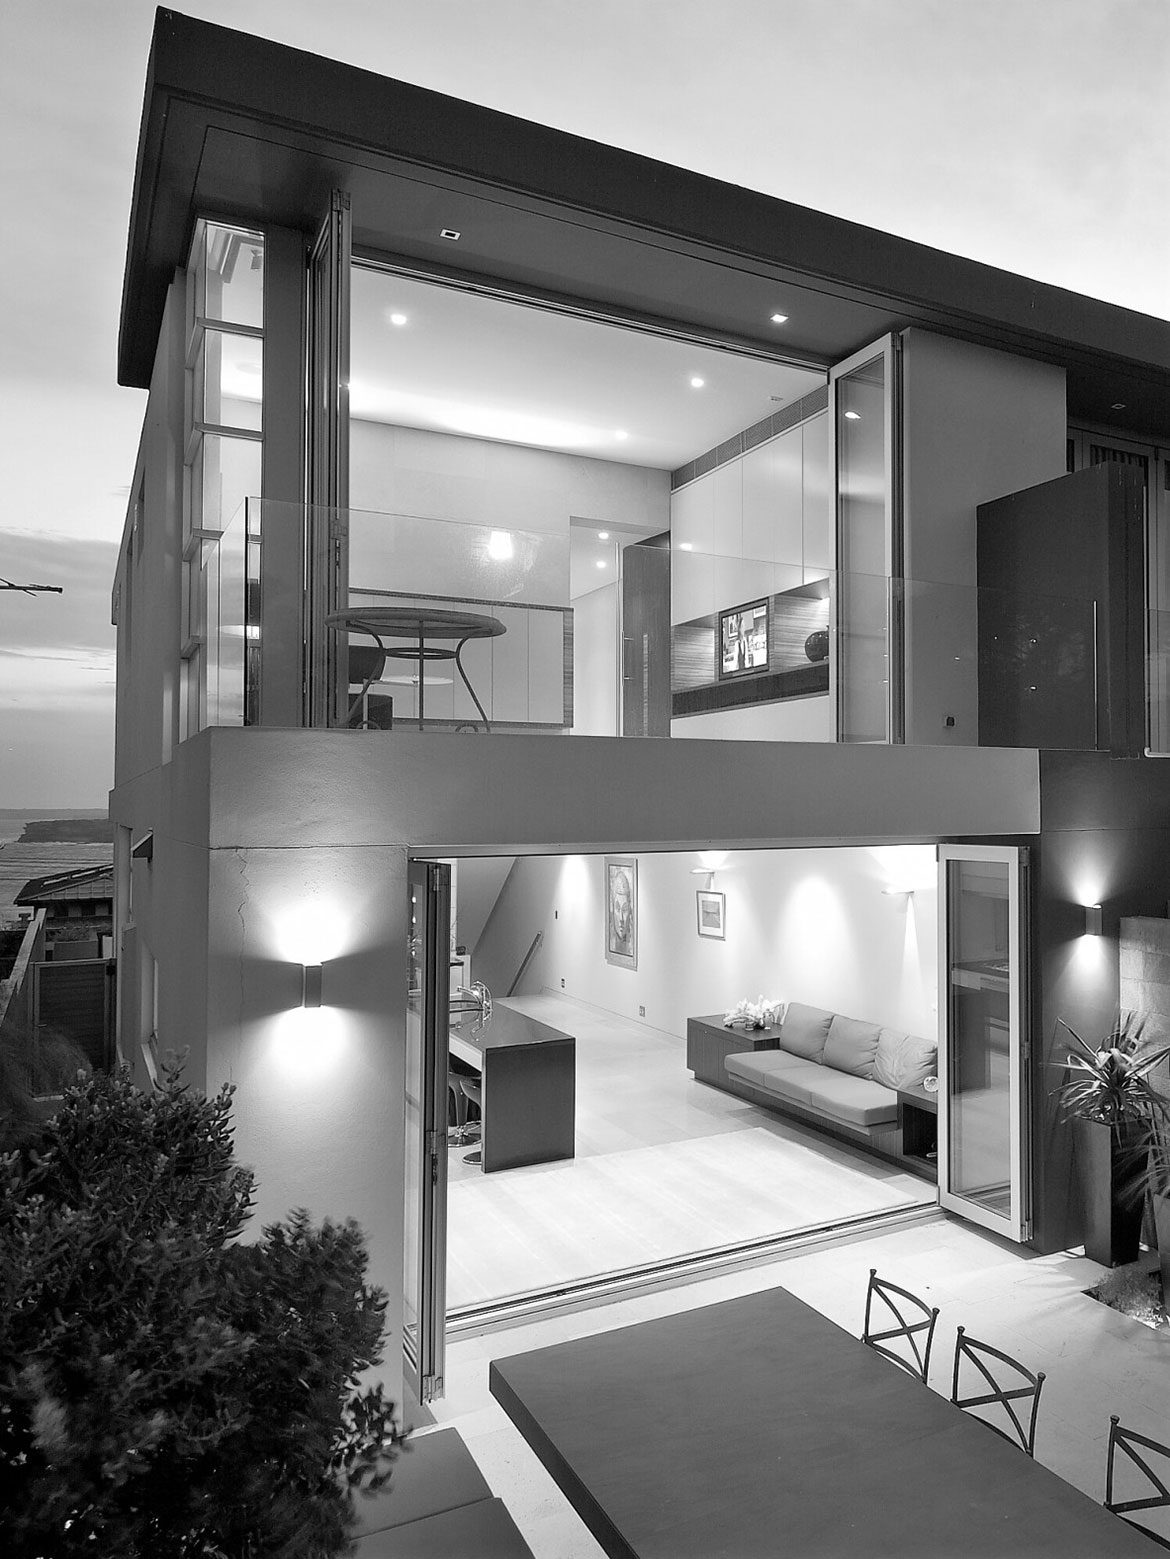 Tamarama Semi Houses - by Manolev & Associates Architects